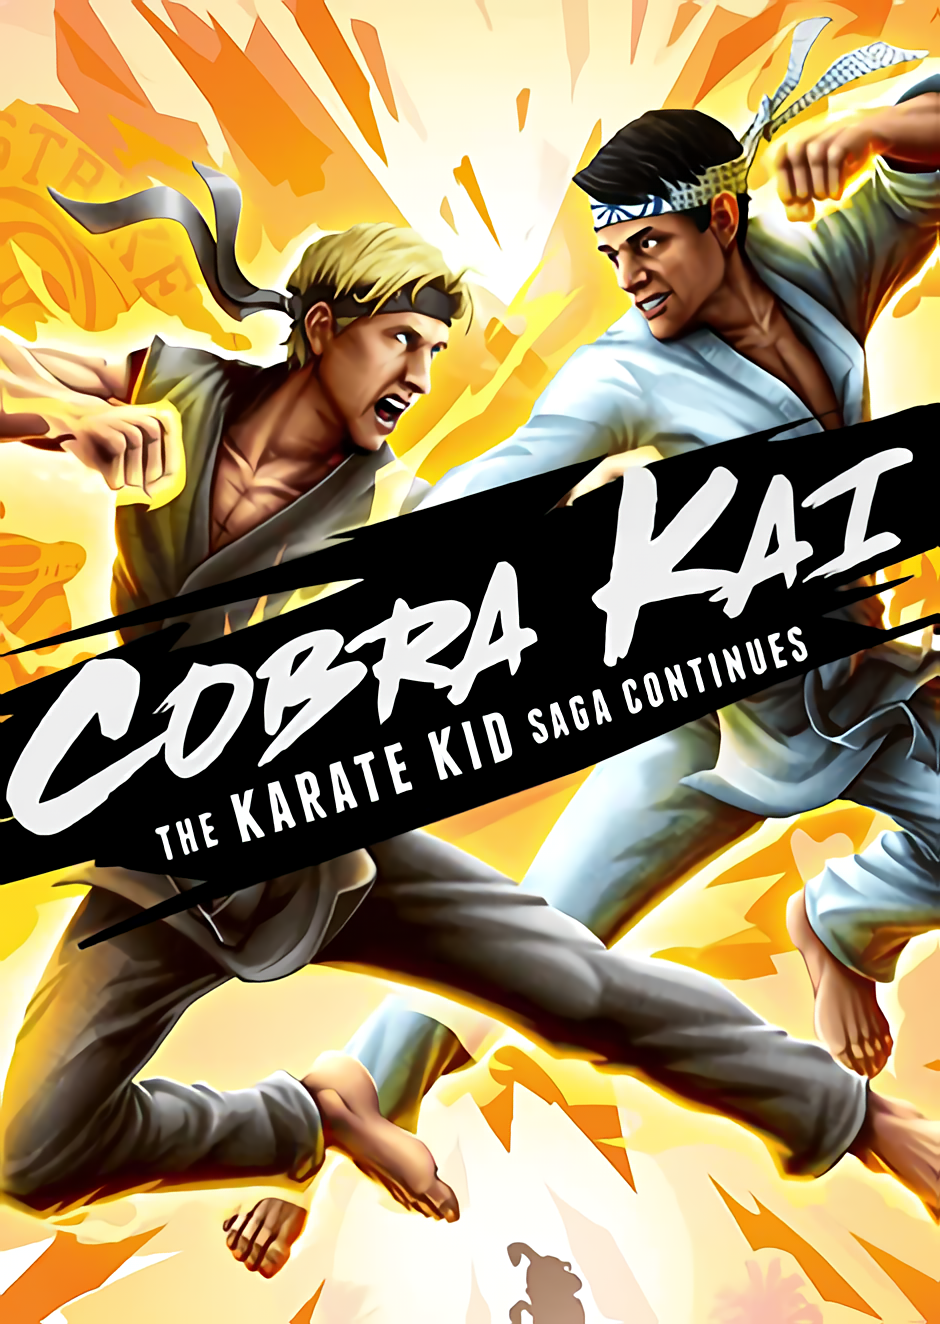 cobra kai: the karate kid saga continues [pc